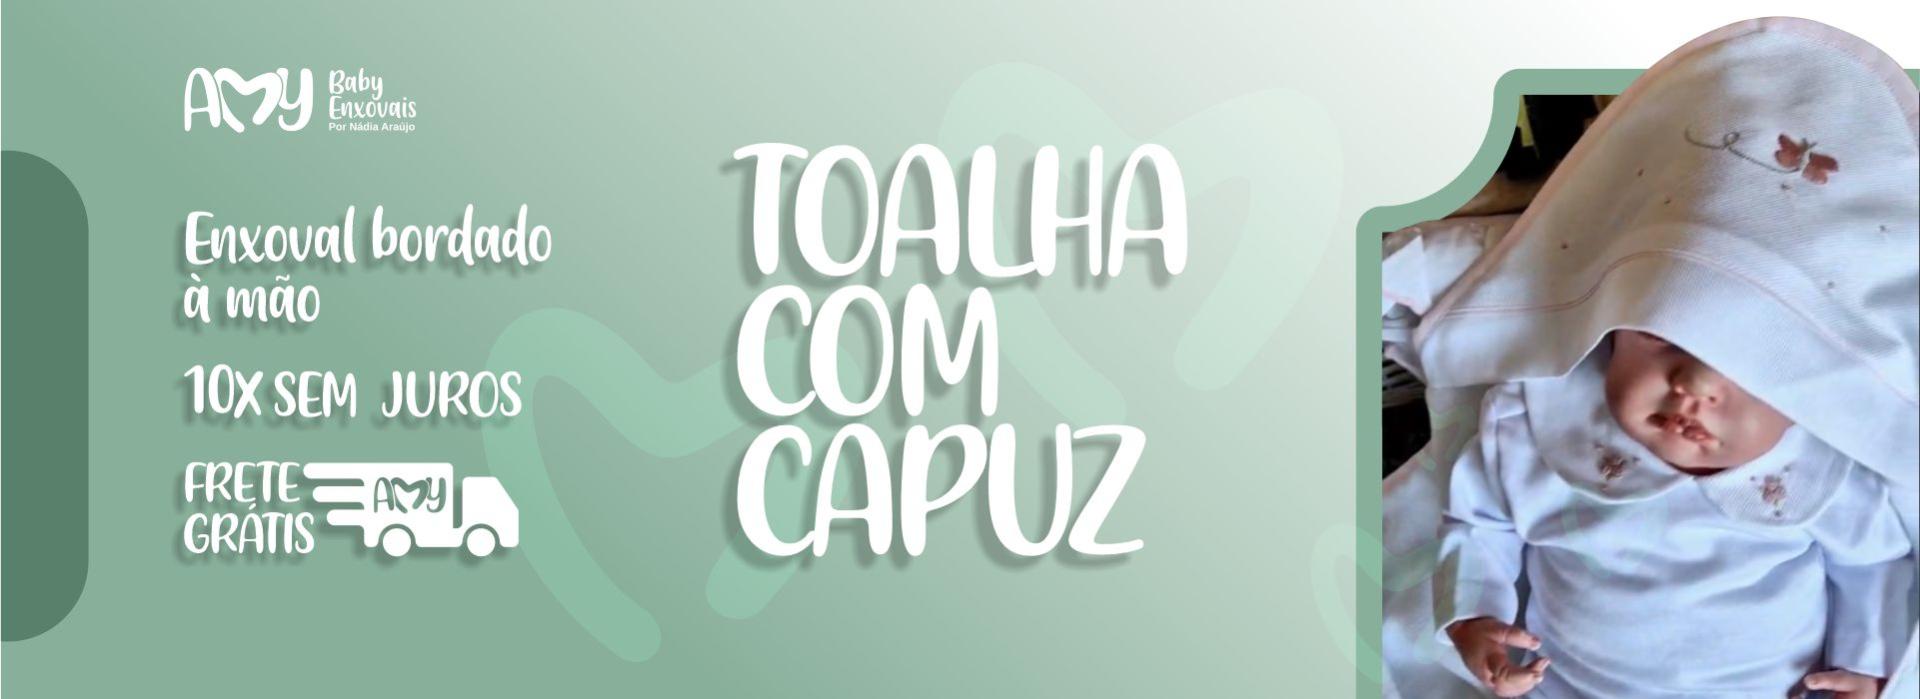 TOALHA CAPUZ